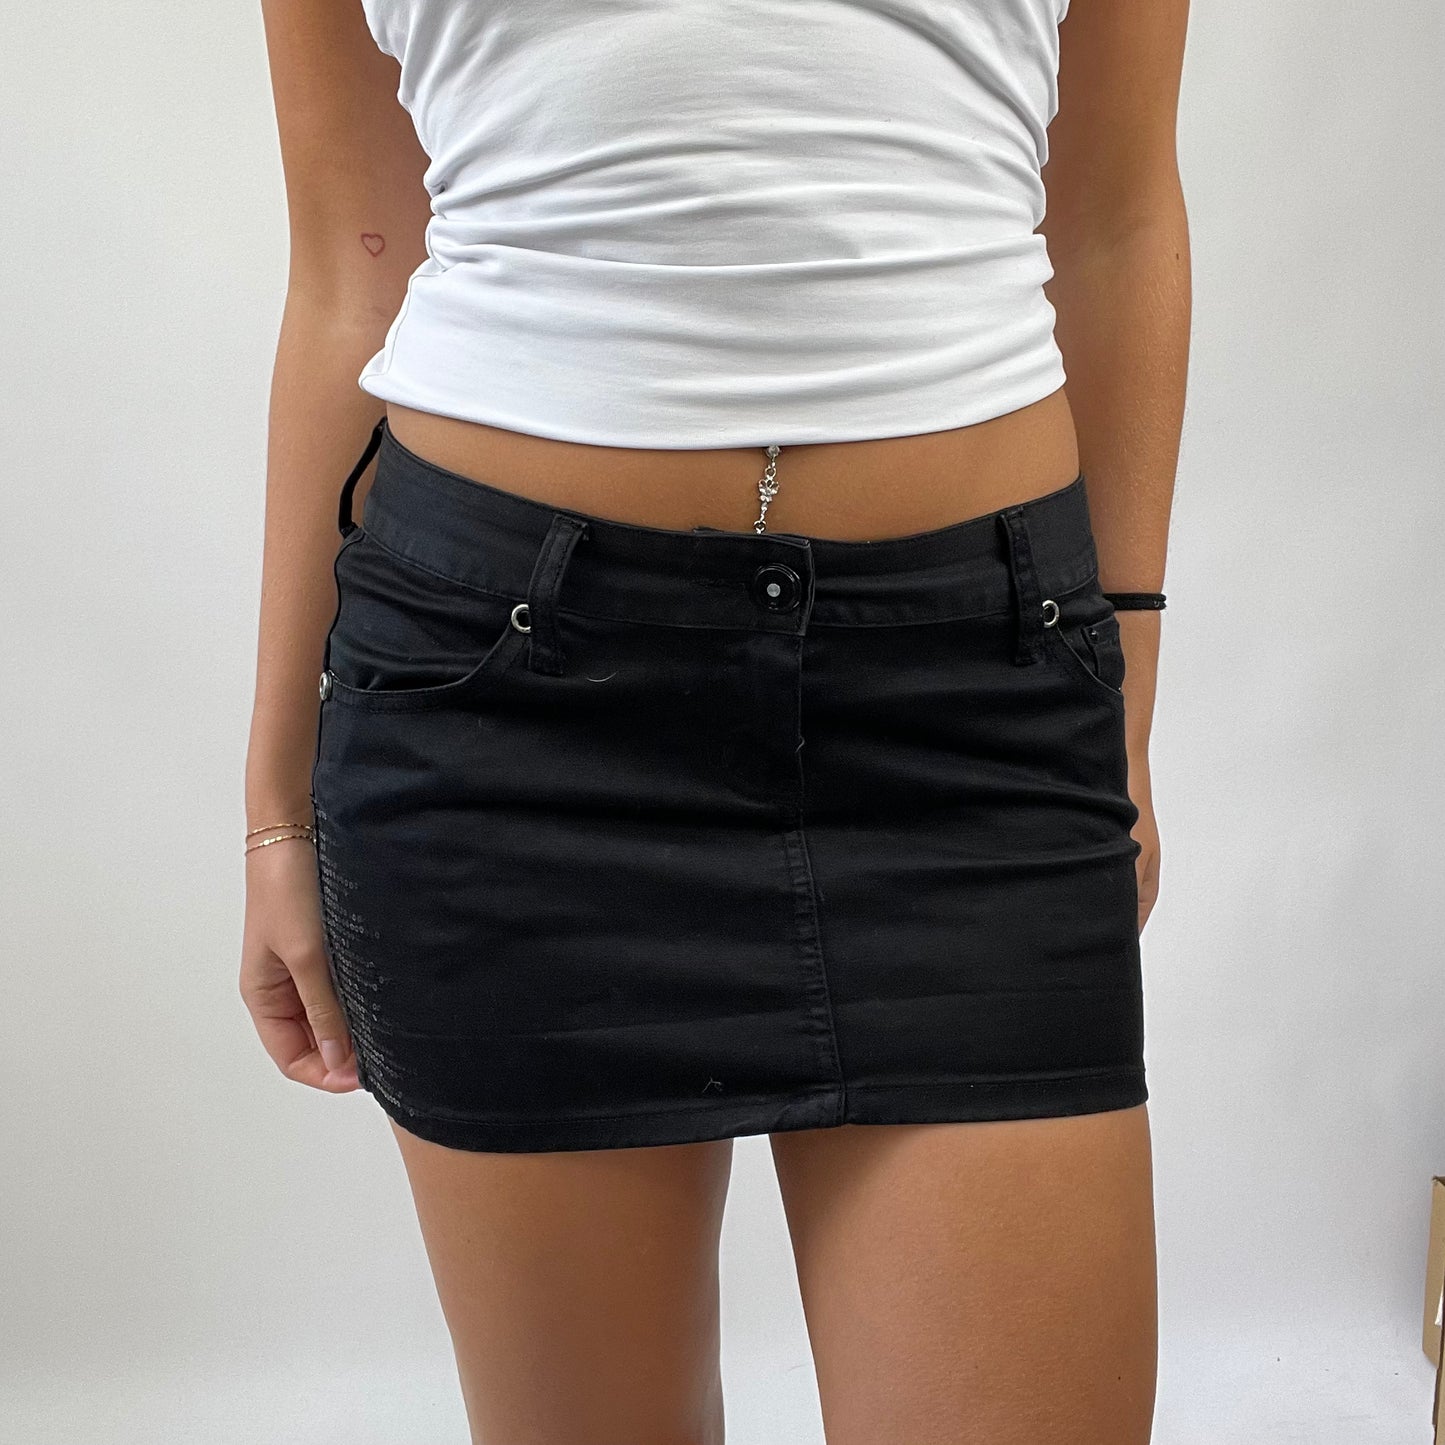 MANHATTAN GIRL DROP | small black sequin mini skirt